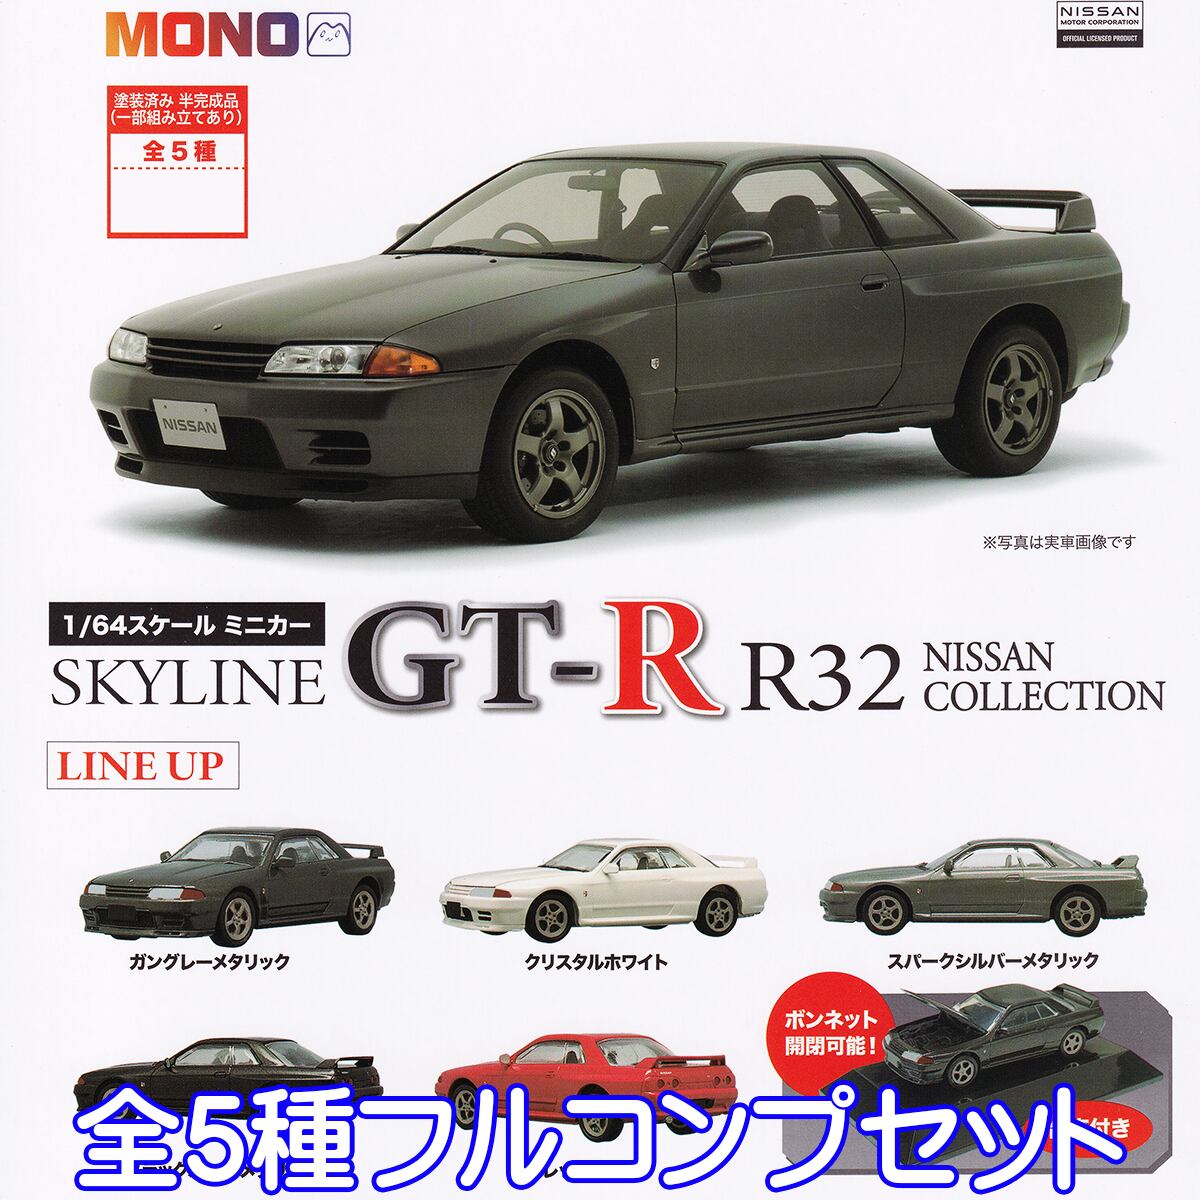 NISSAN　GT-R ジオラマセット　R32〜 MINI-gt 1/64